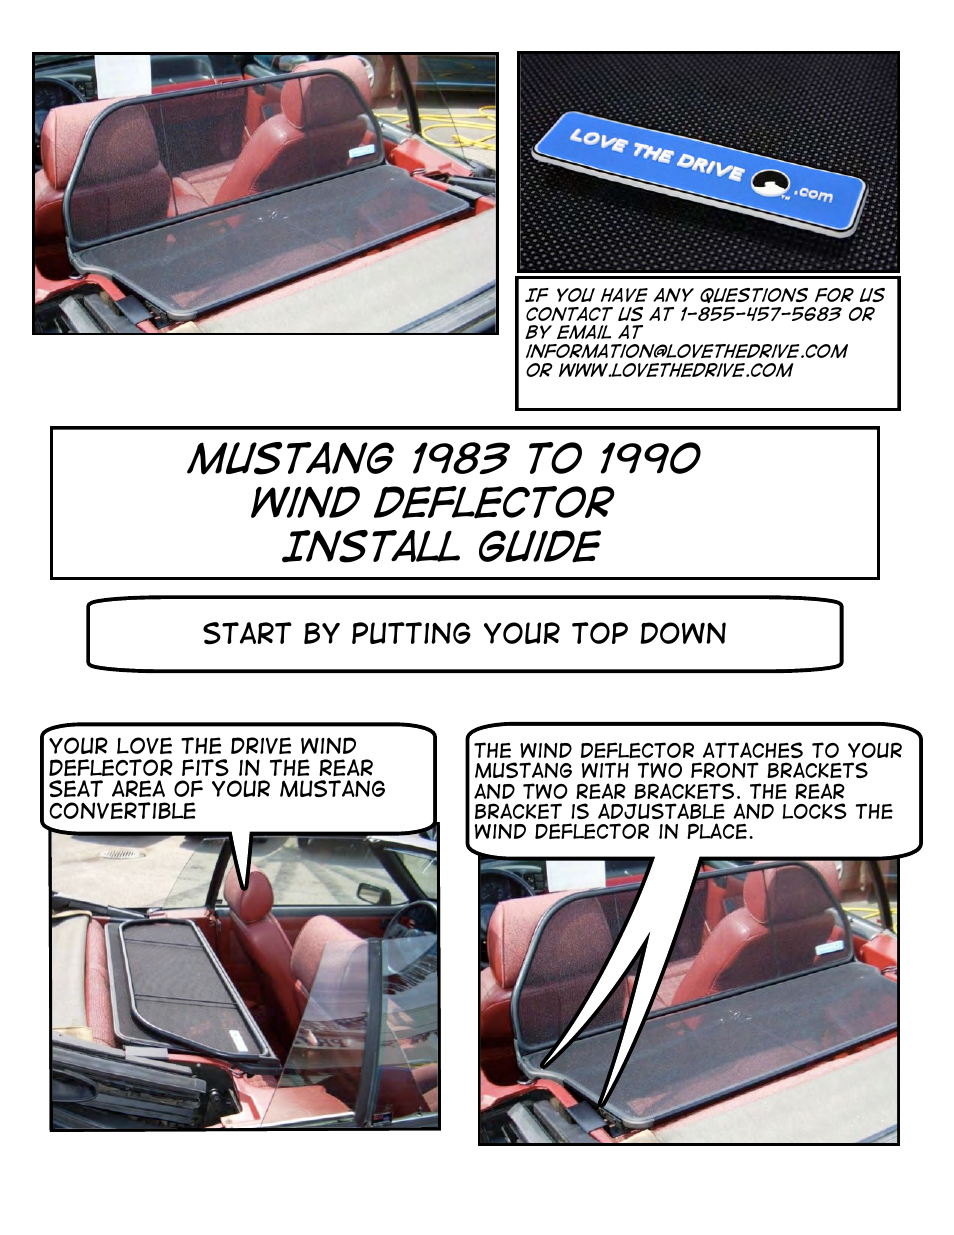 Mustang Wind Deflector 1983 to 1989